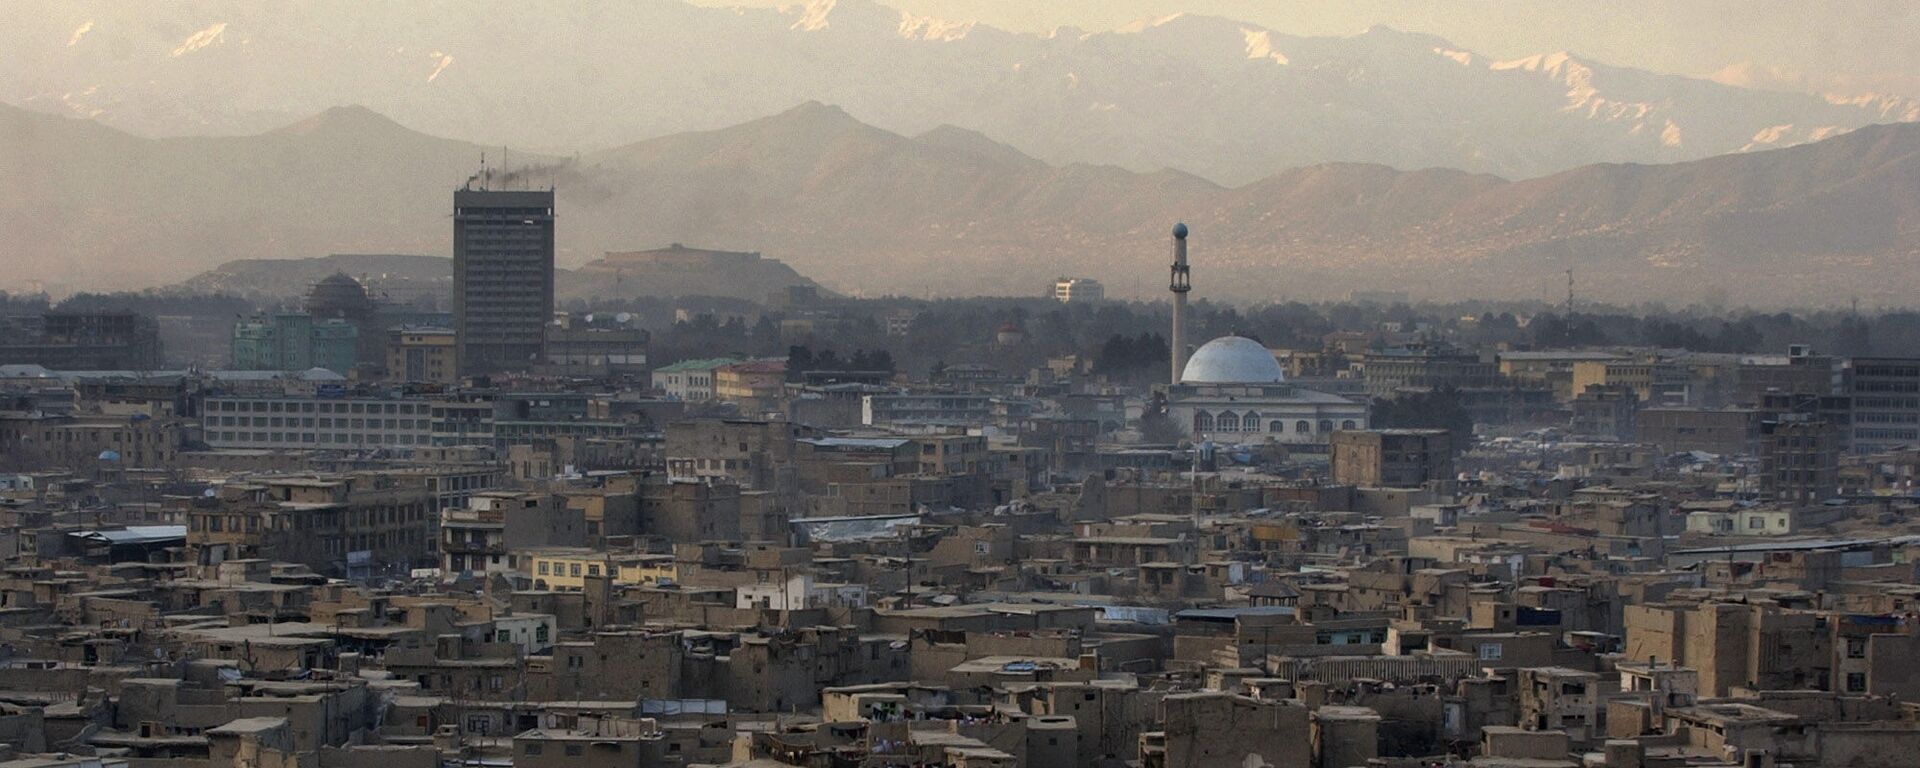 Вид города Кабул, Афганистан  - اسپوتنیک ایران  , 1920, 22.11.2021